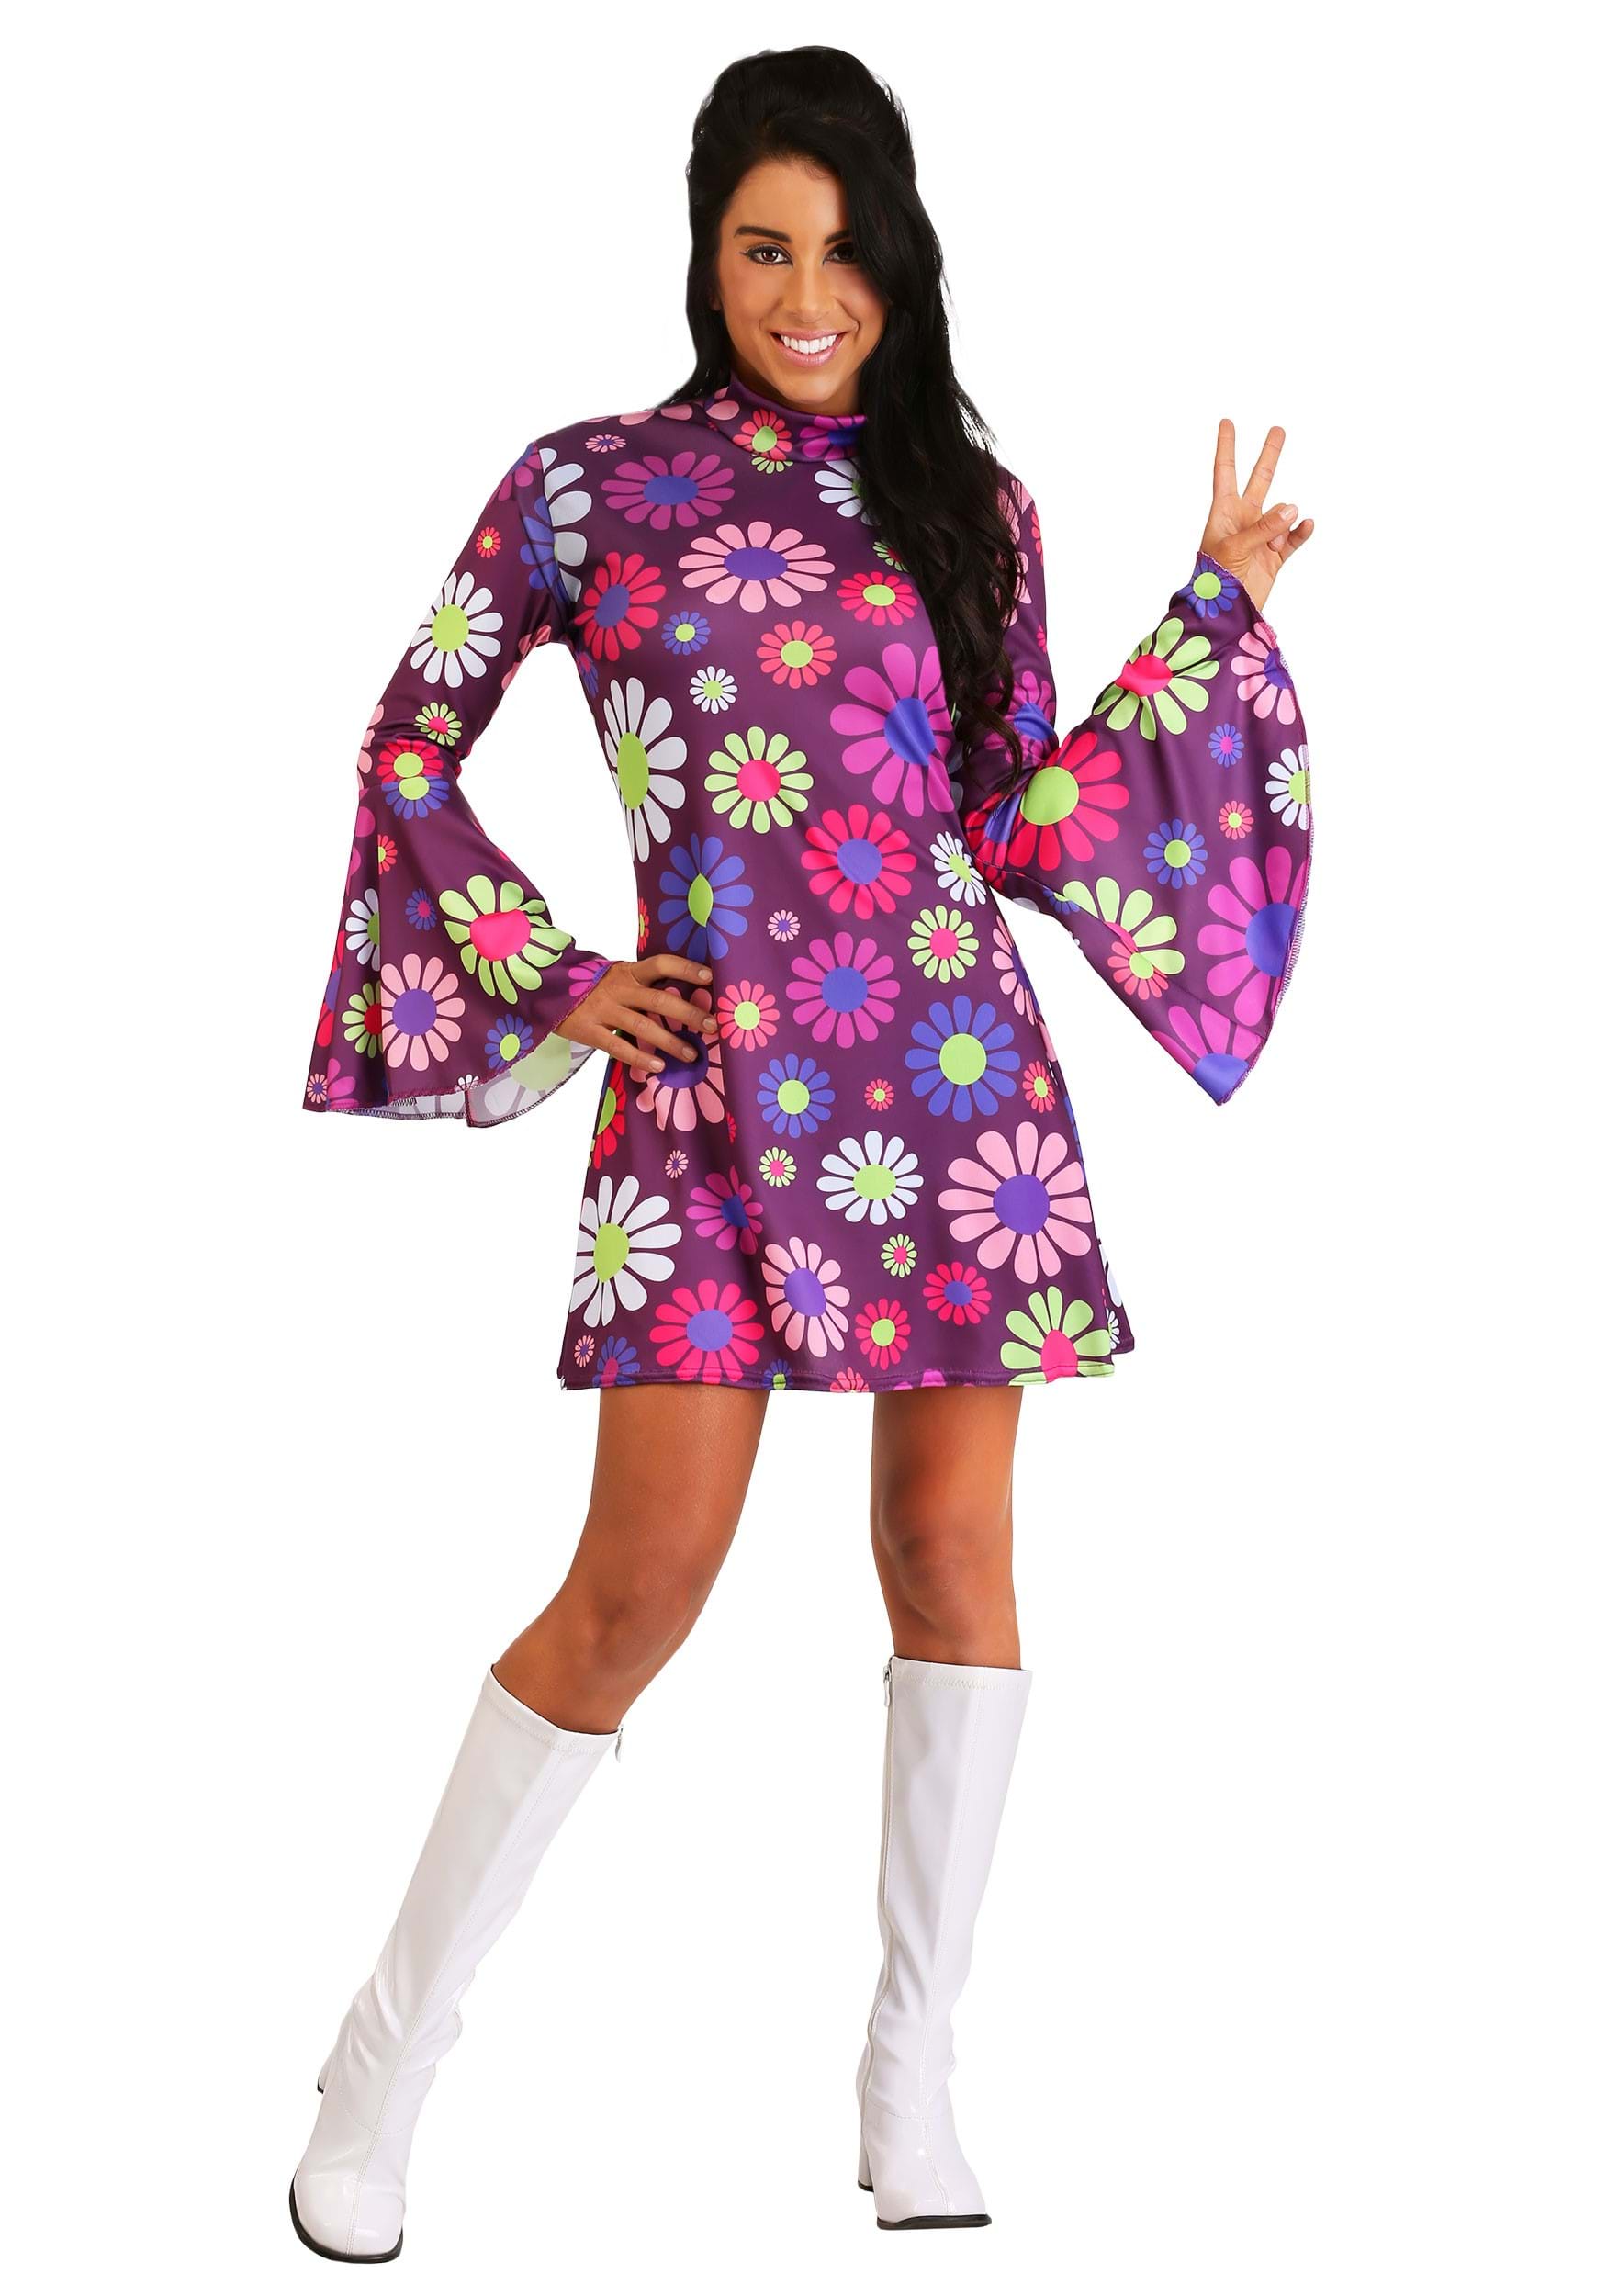 Adult Groovy Flower Power Women's Costume